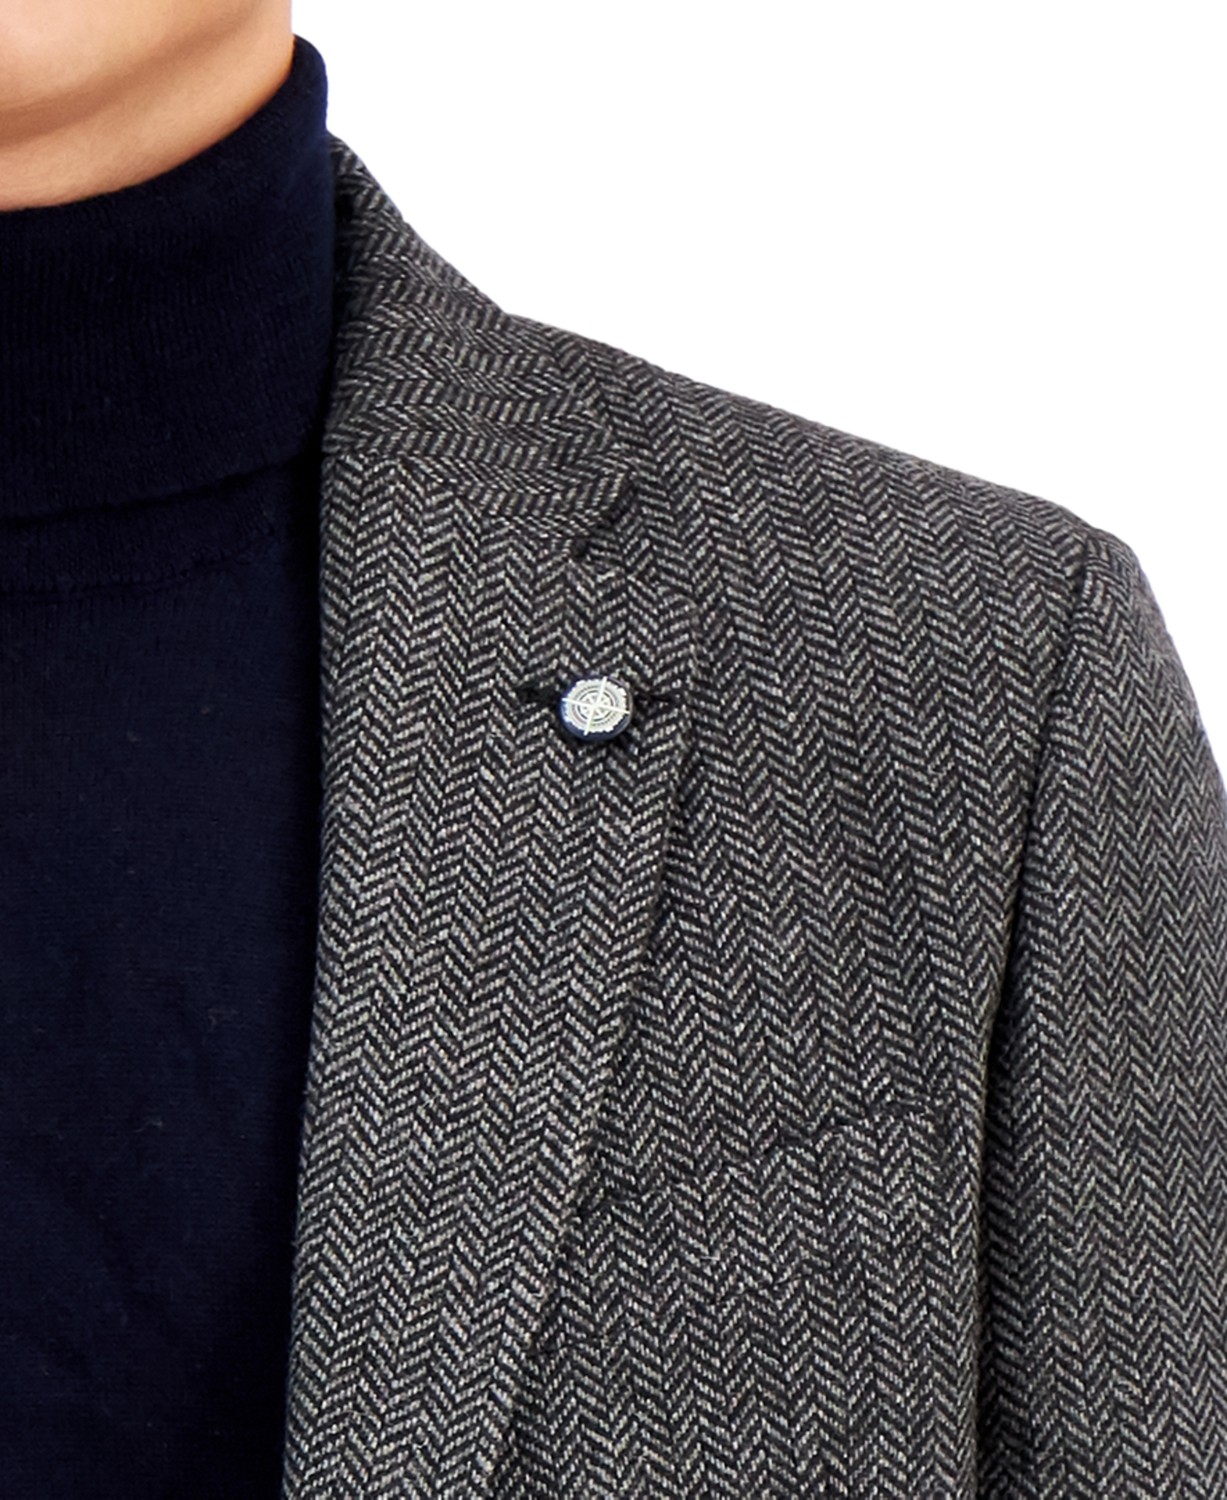 www.couturepoint.com-nautica-mens-grey-wool-blend-modern-fit-blazer